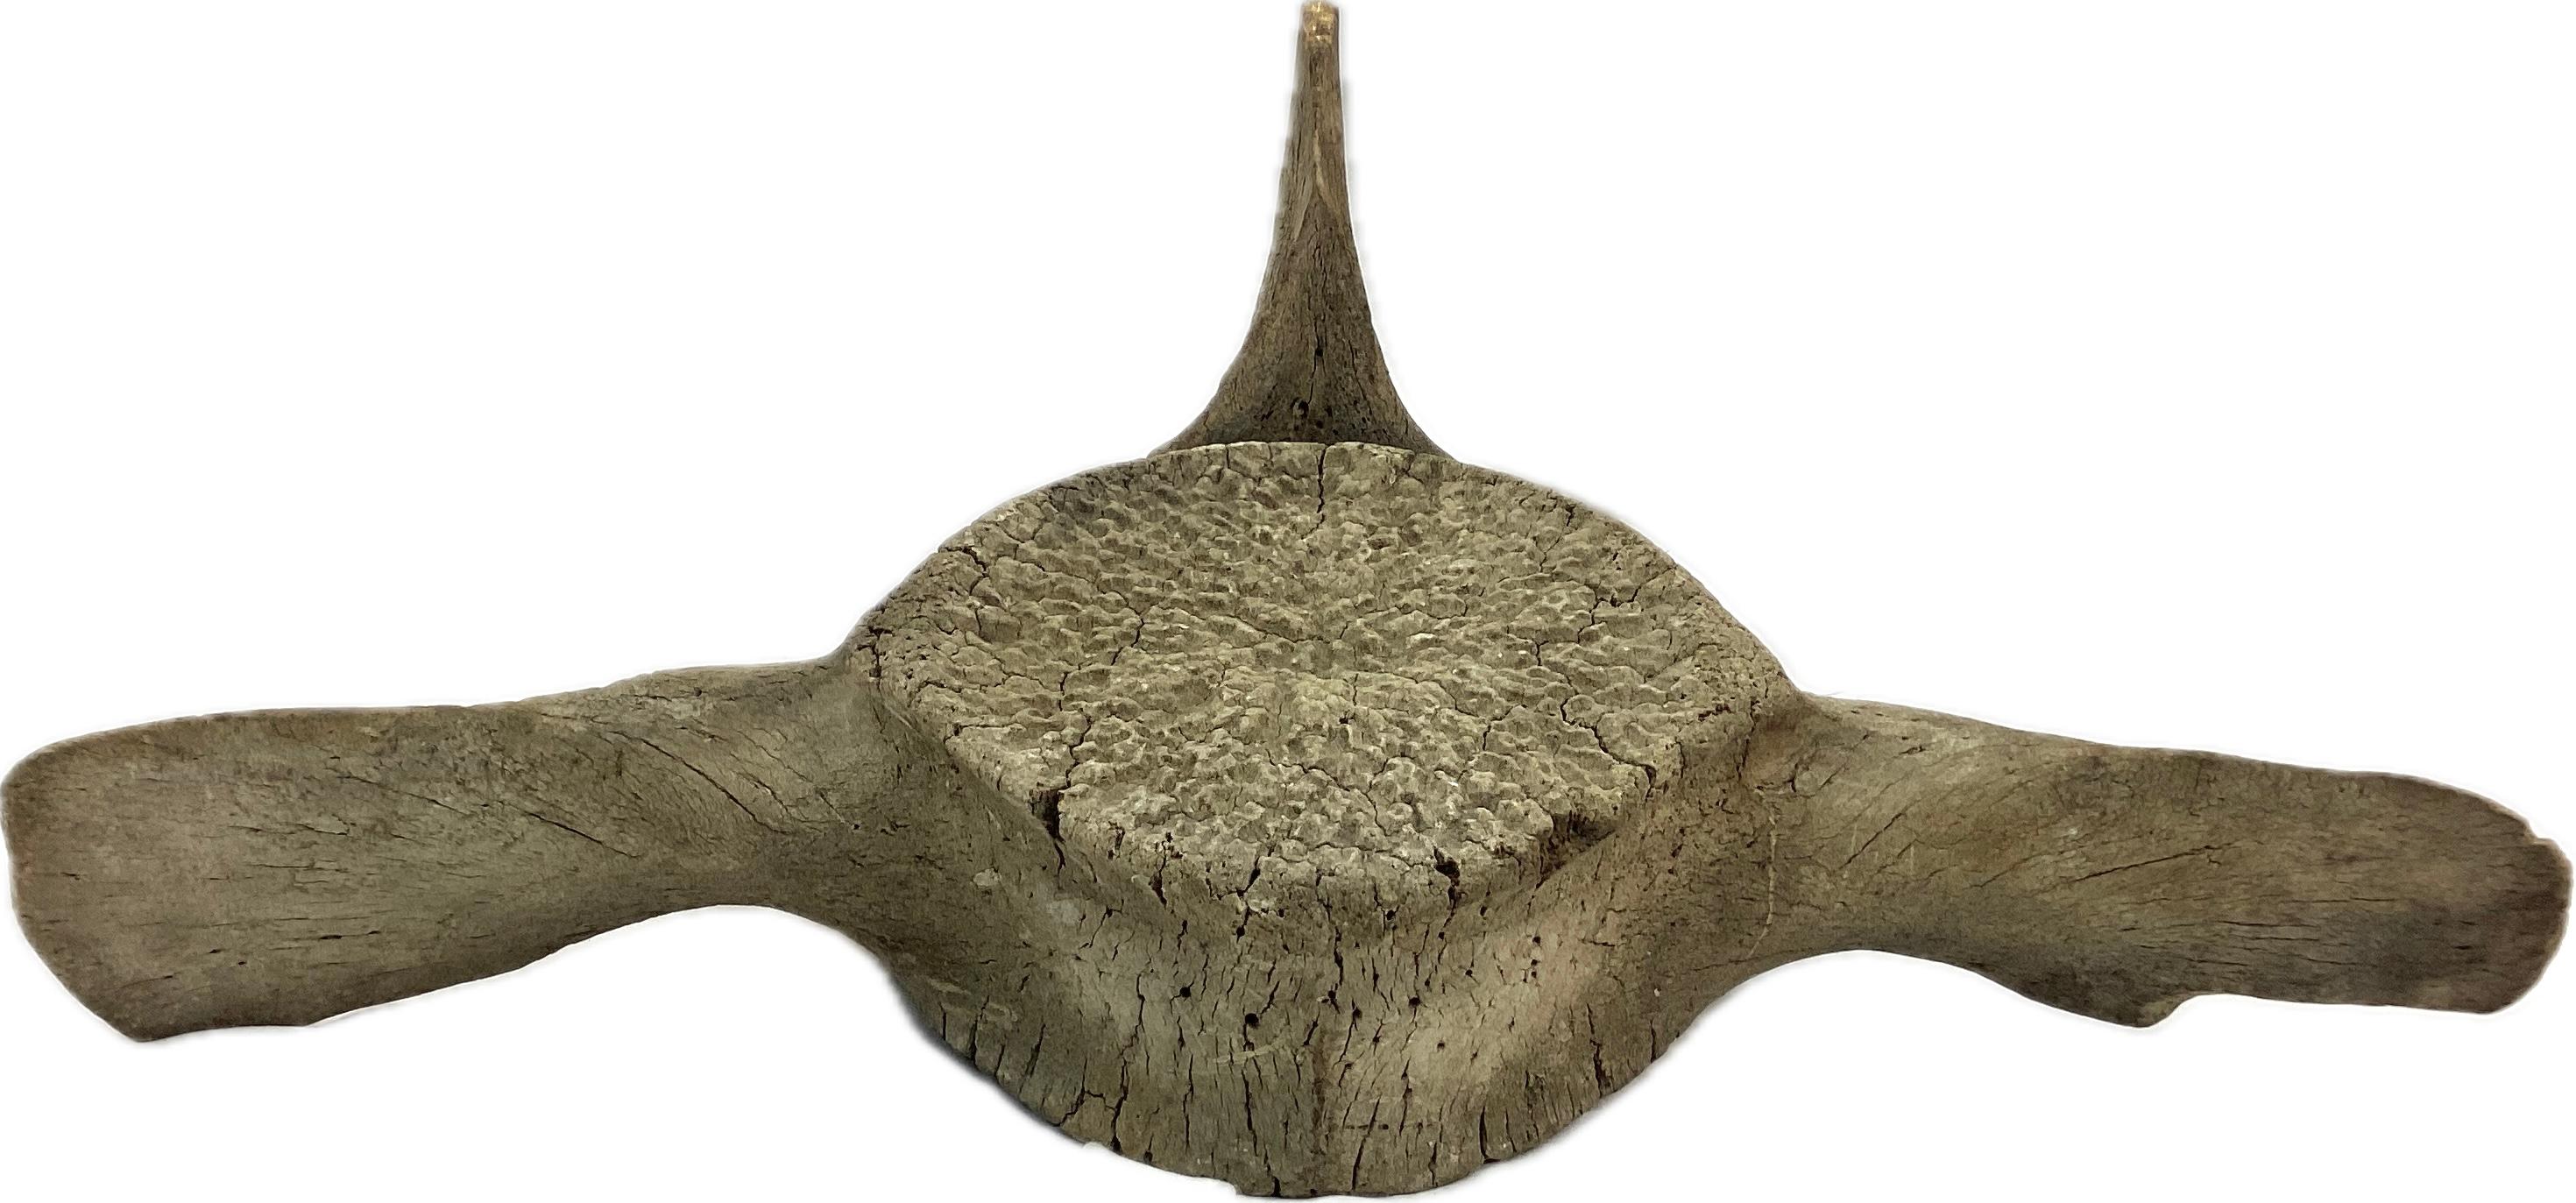 Bone Large Fossilized Whale Vertebrae  For Sale